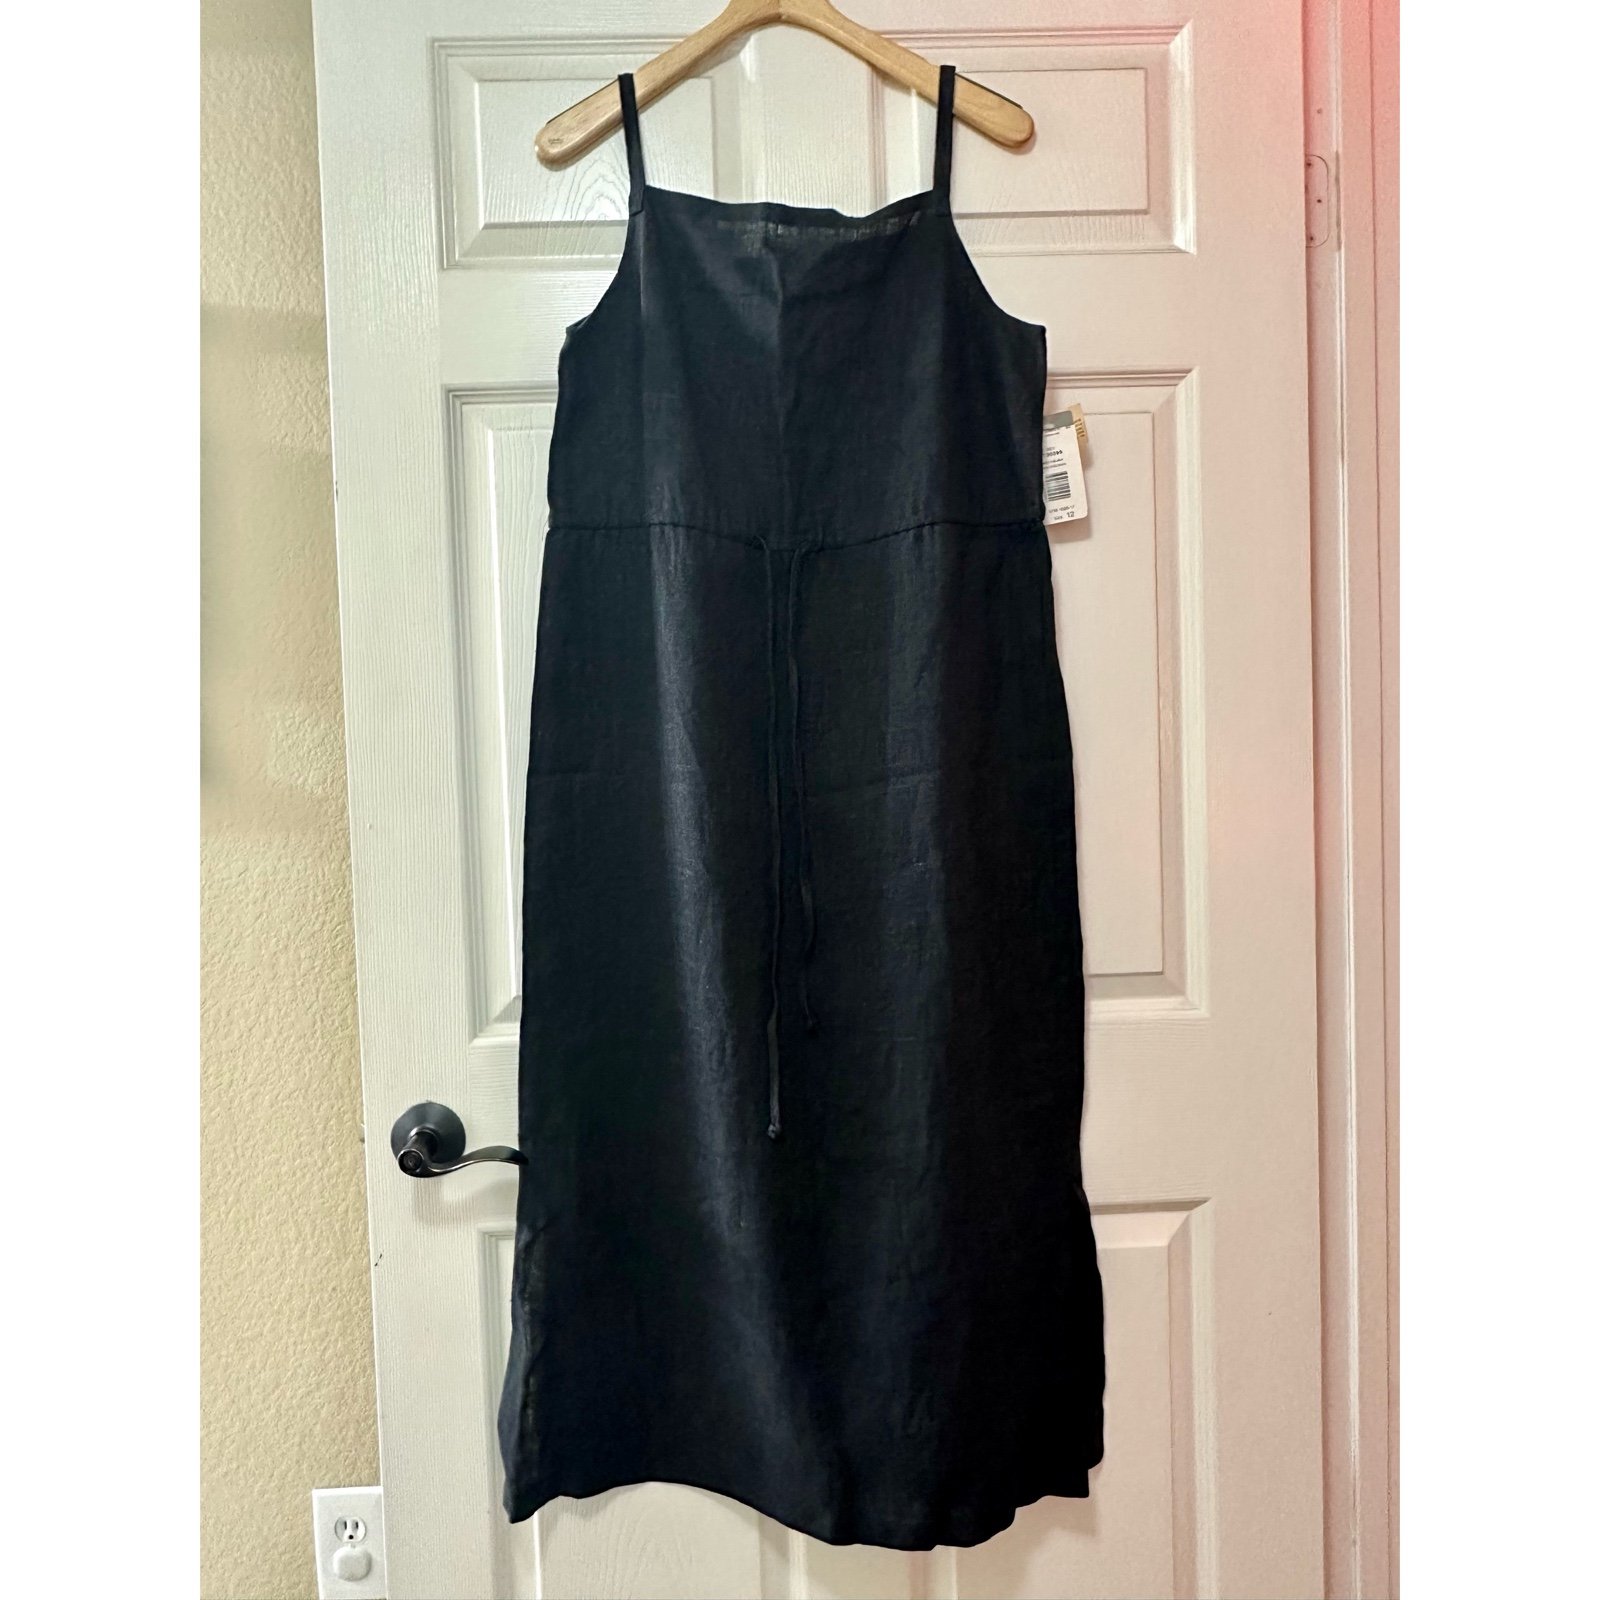 reasonable price Harve Bernard Dress Size 12 Black 100%